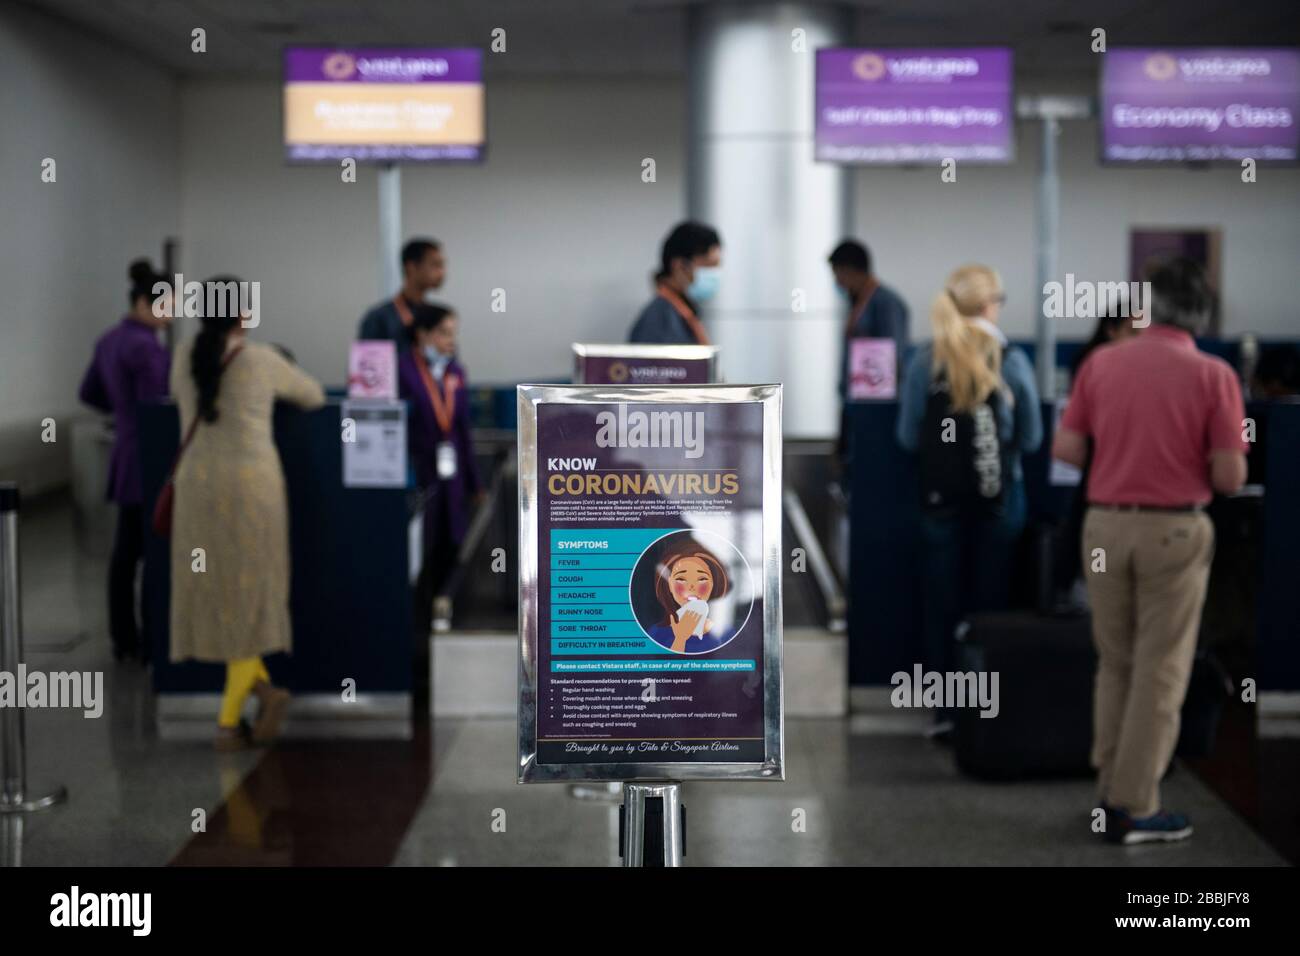 Coronavirus information and warning sign at Khajuraho airport, Madhya Pradesh, India, during the Coronavirus health crisis of 2020. Stock Photo